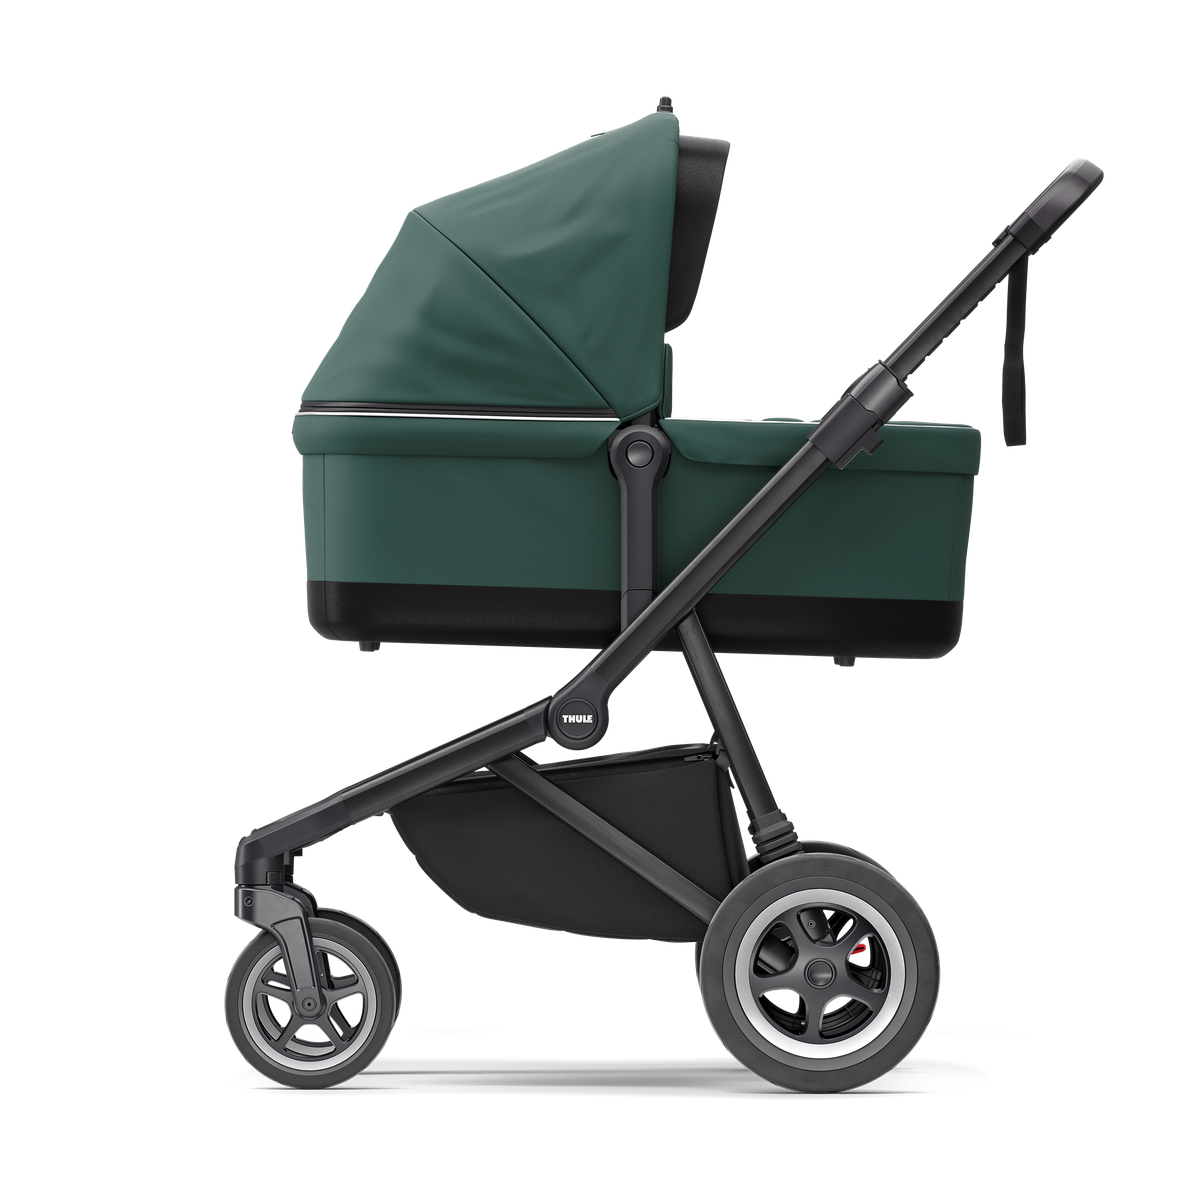 Thule Sleek city stroller mallard green on black with bassinet mallard green